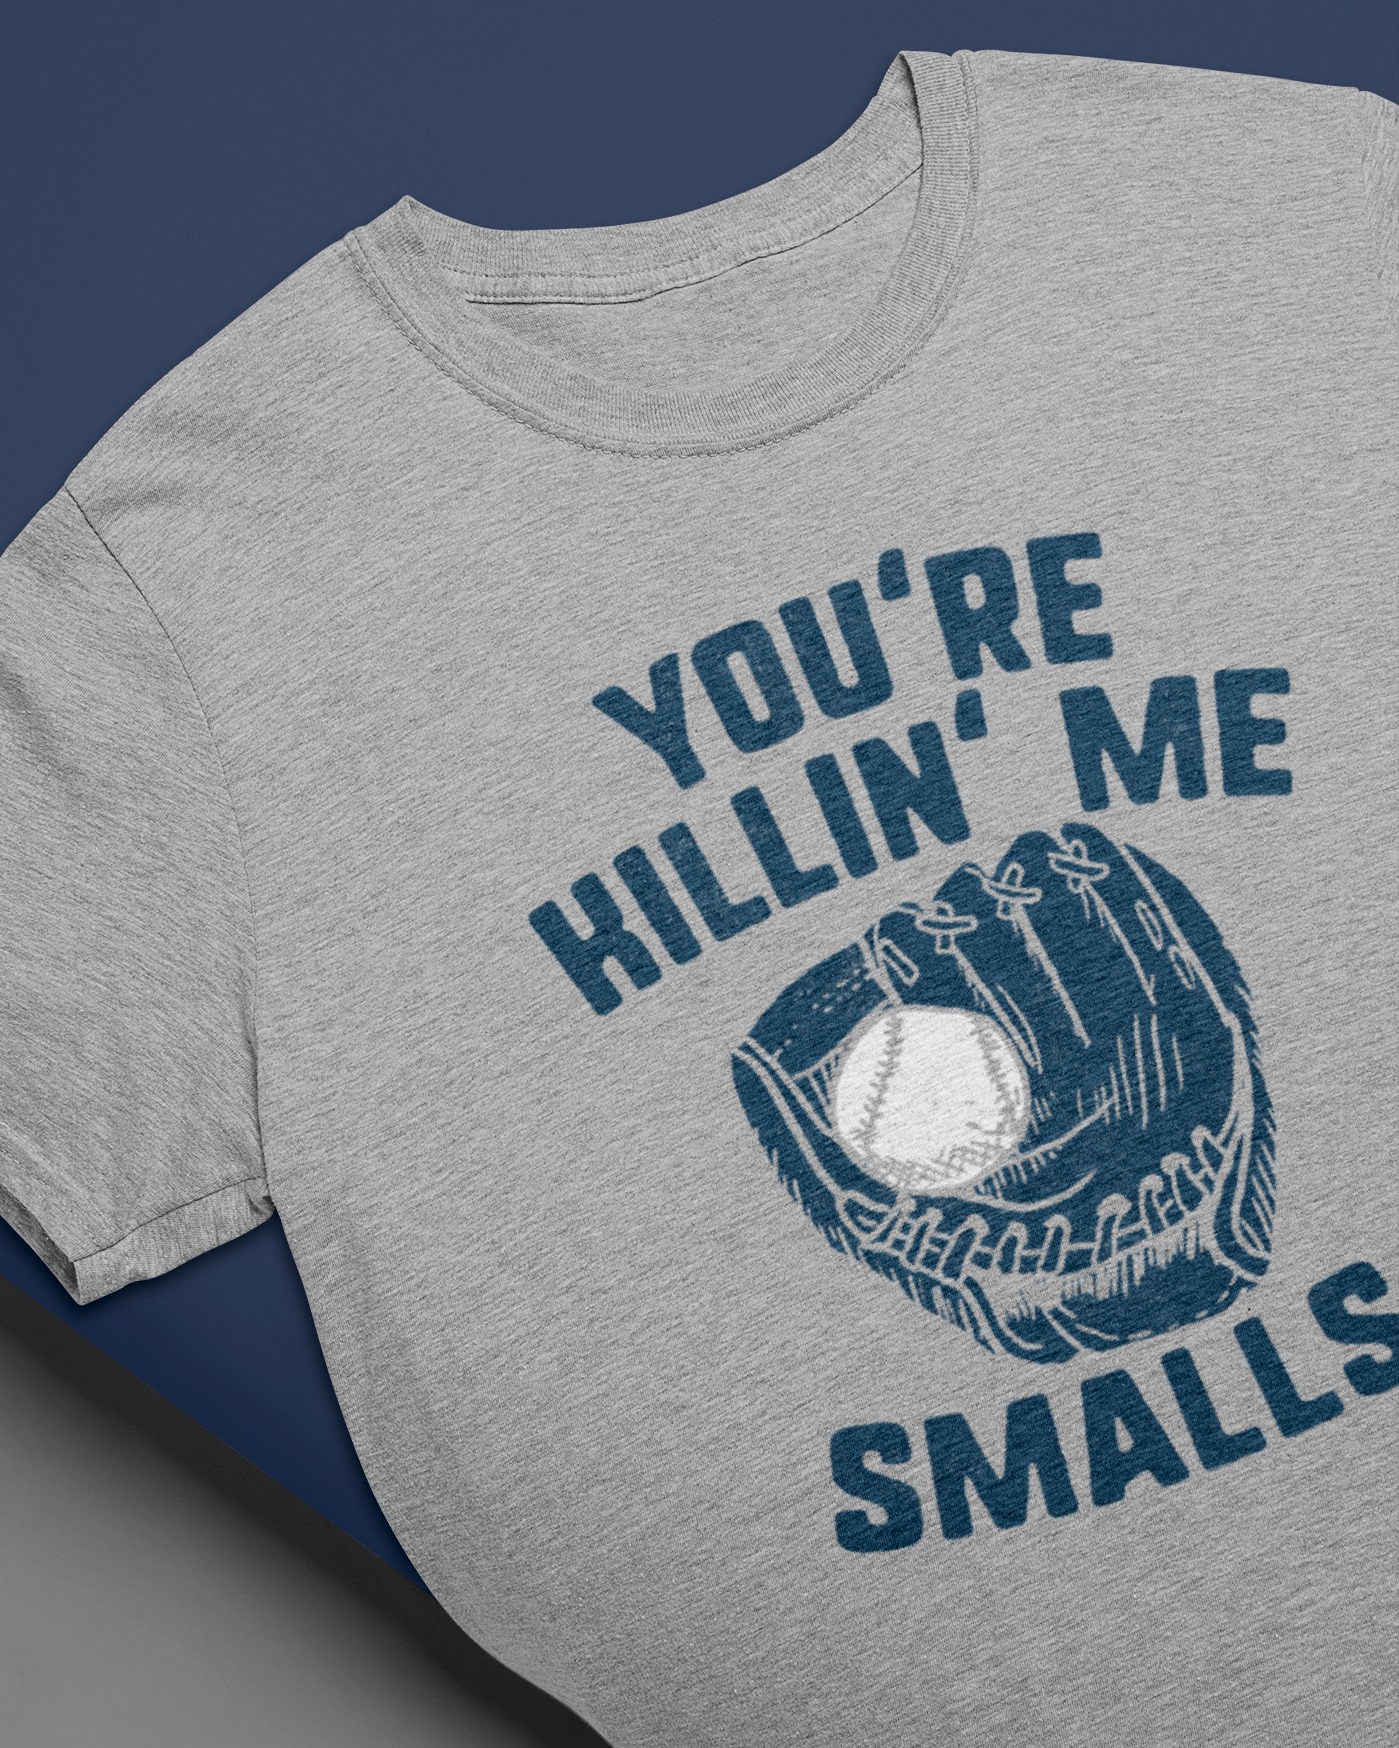 You're Killin' Me Smalls - Baseball Golves And Balls